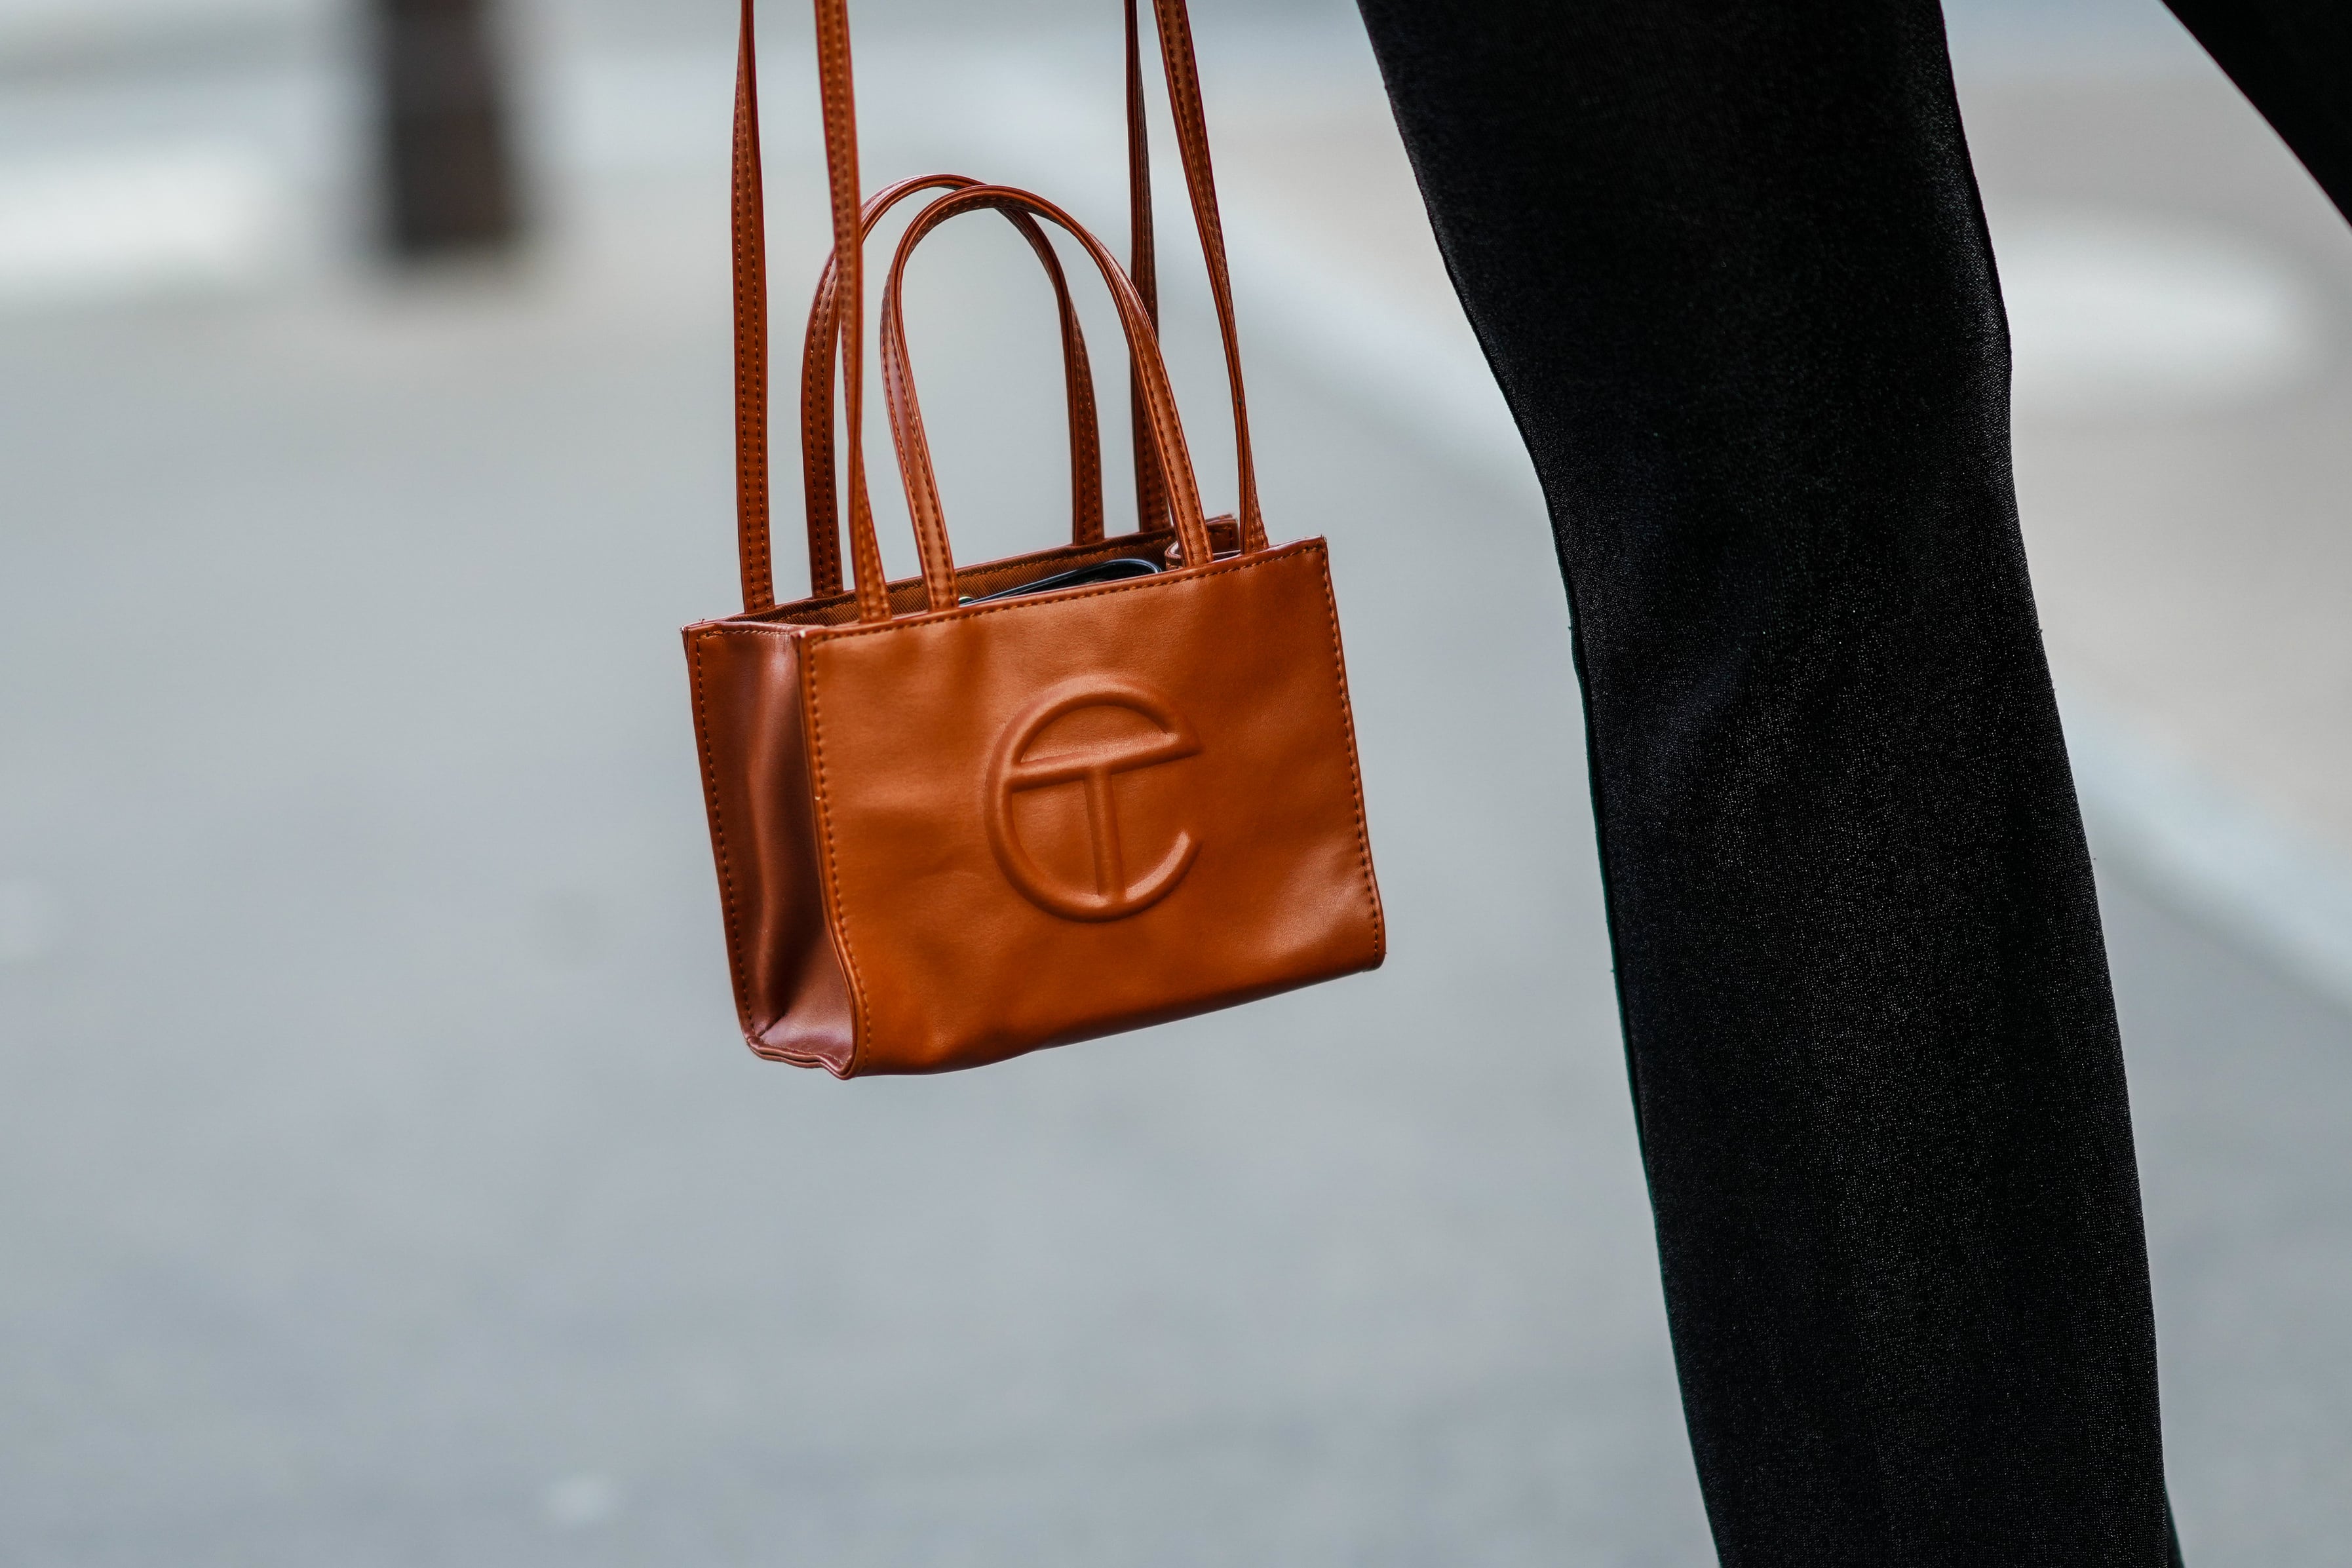 Should I get a work bag from Telfar's Bag Security Program? : r/handbags